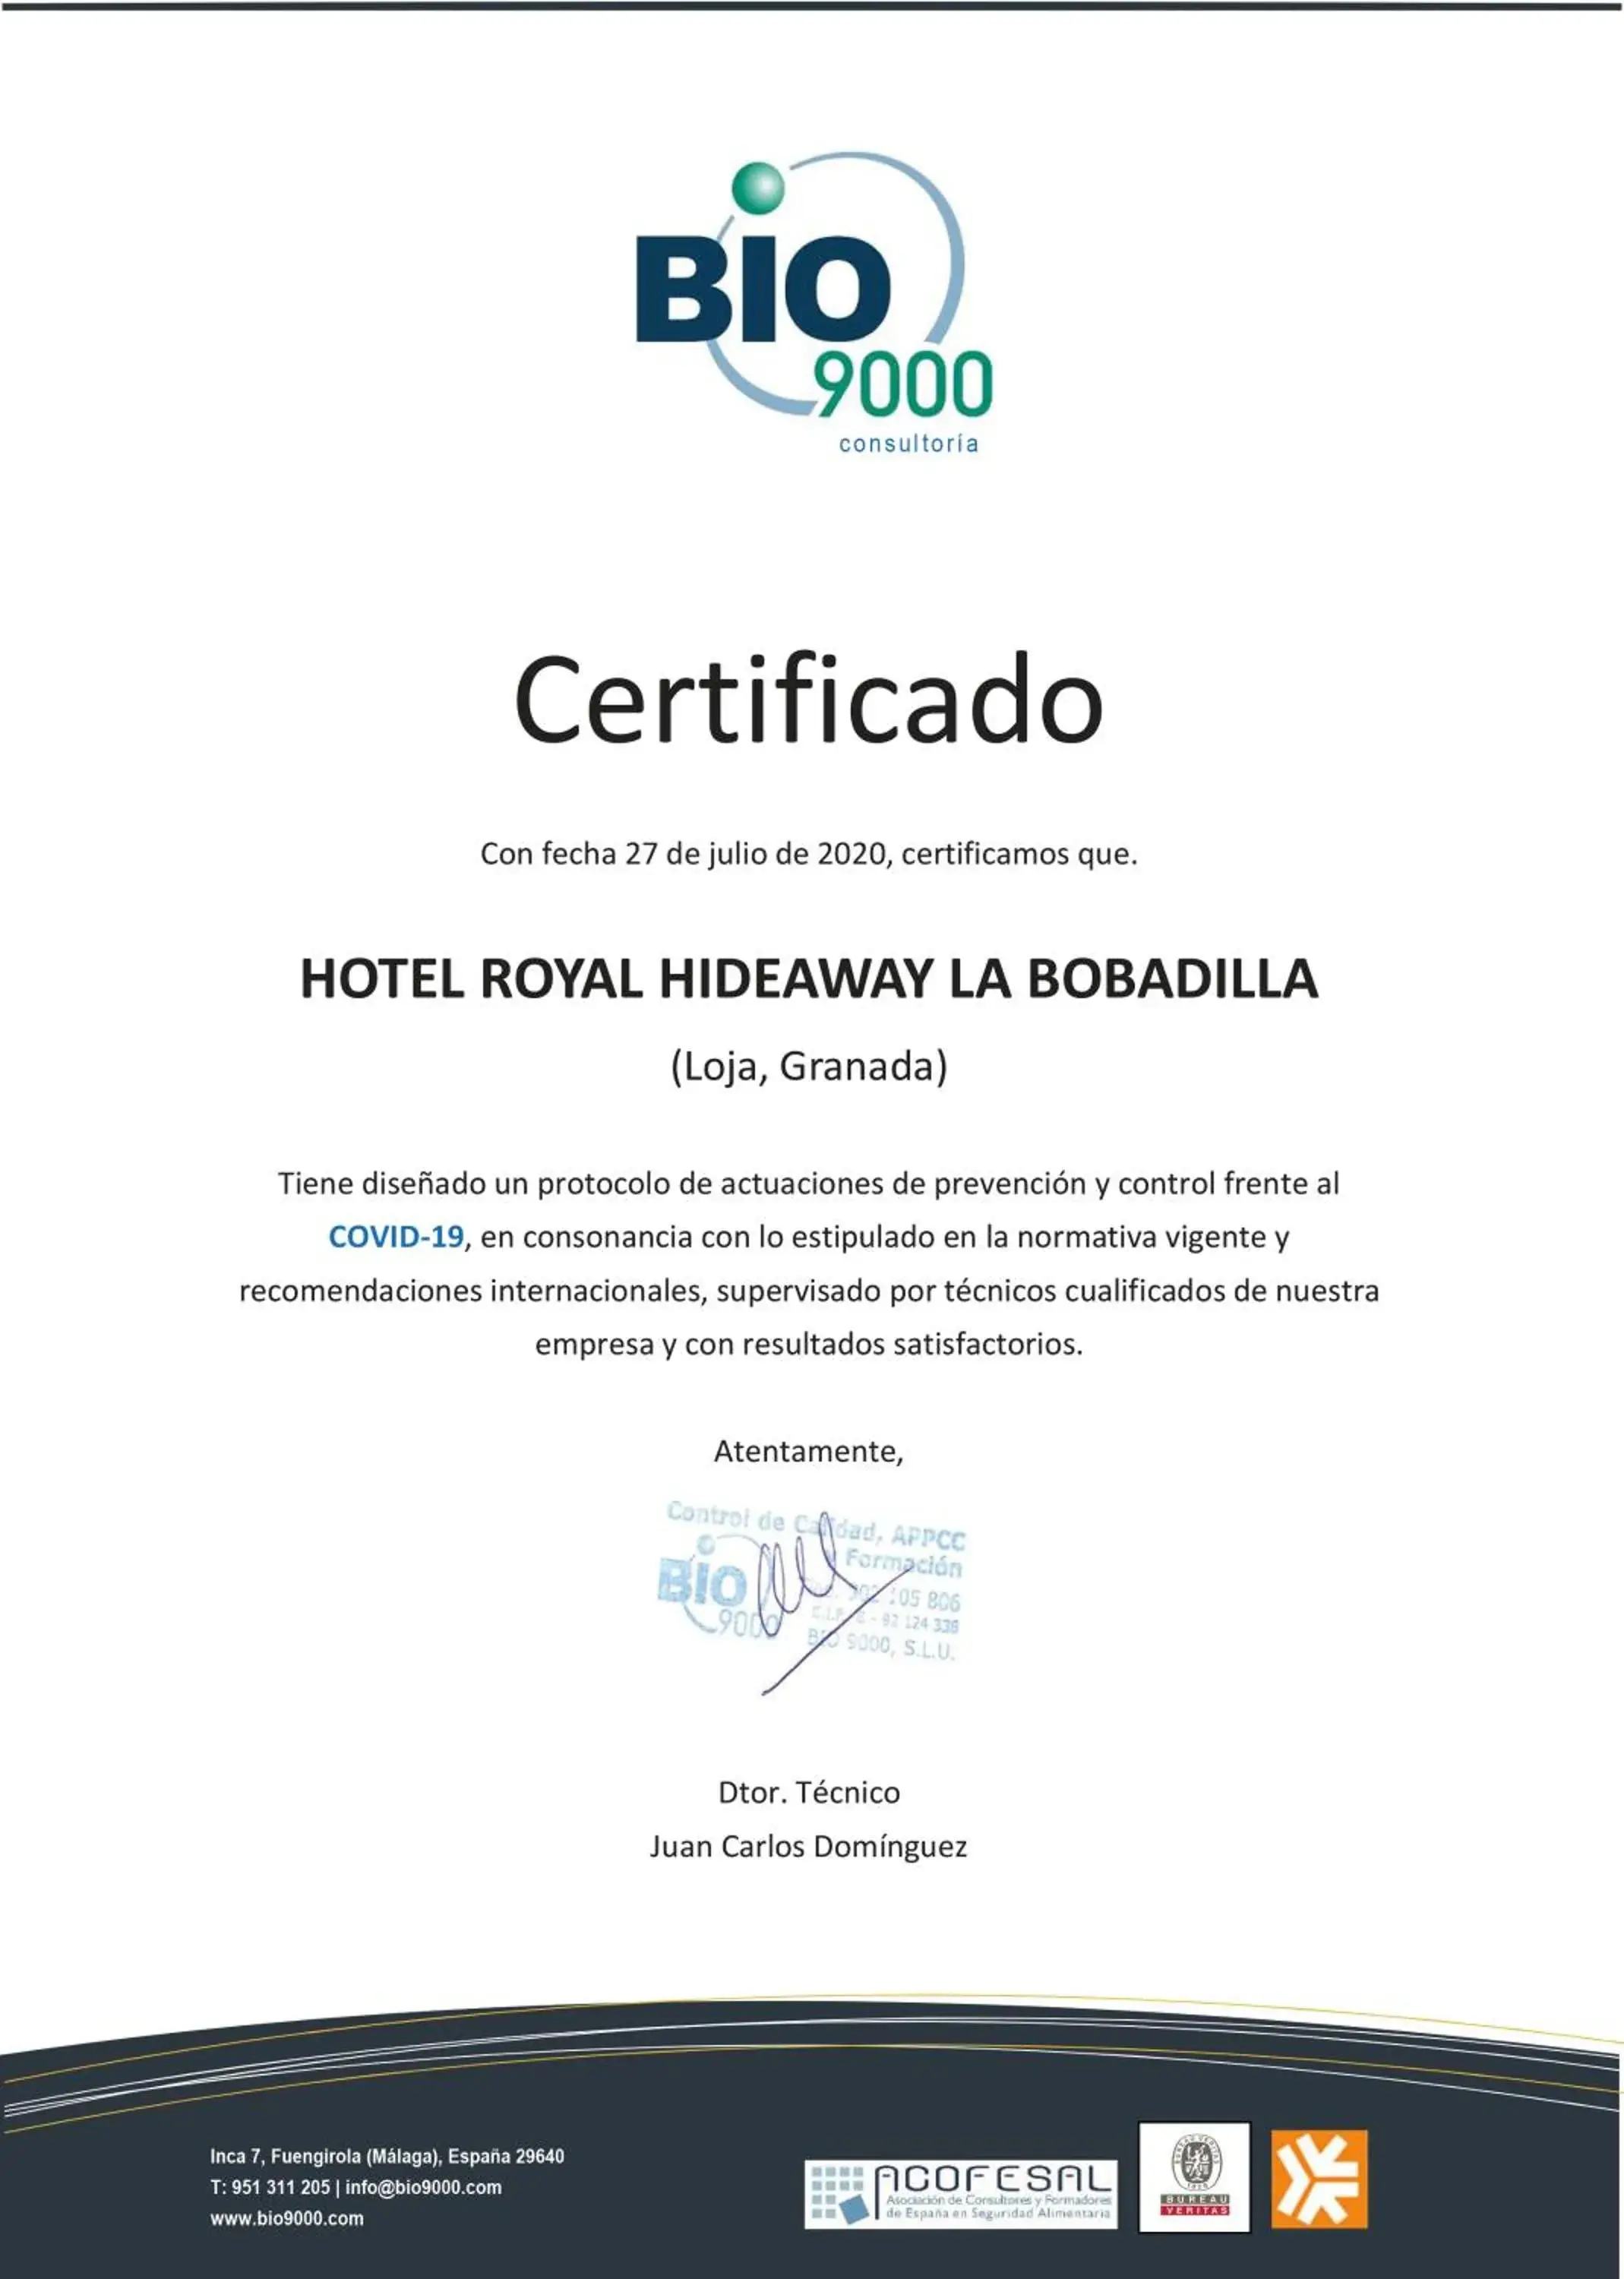 Logo/Certificate/Sign in La Bobadilla, a Royal Hideaway Hotel